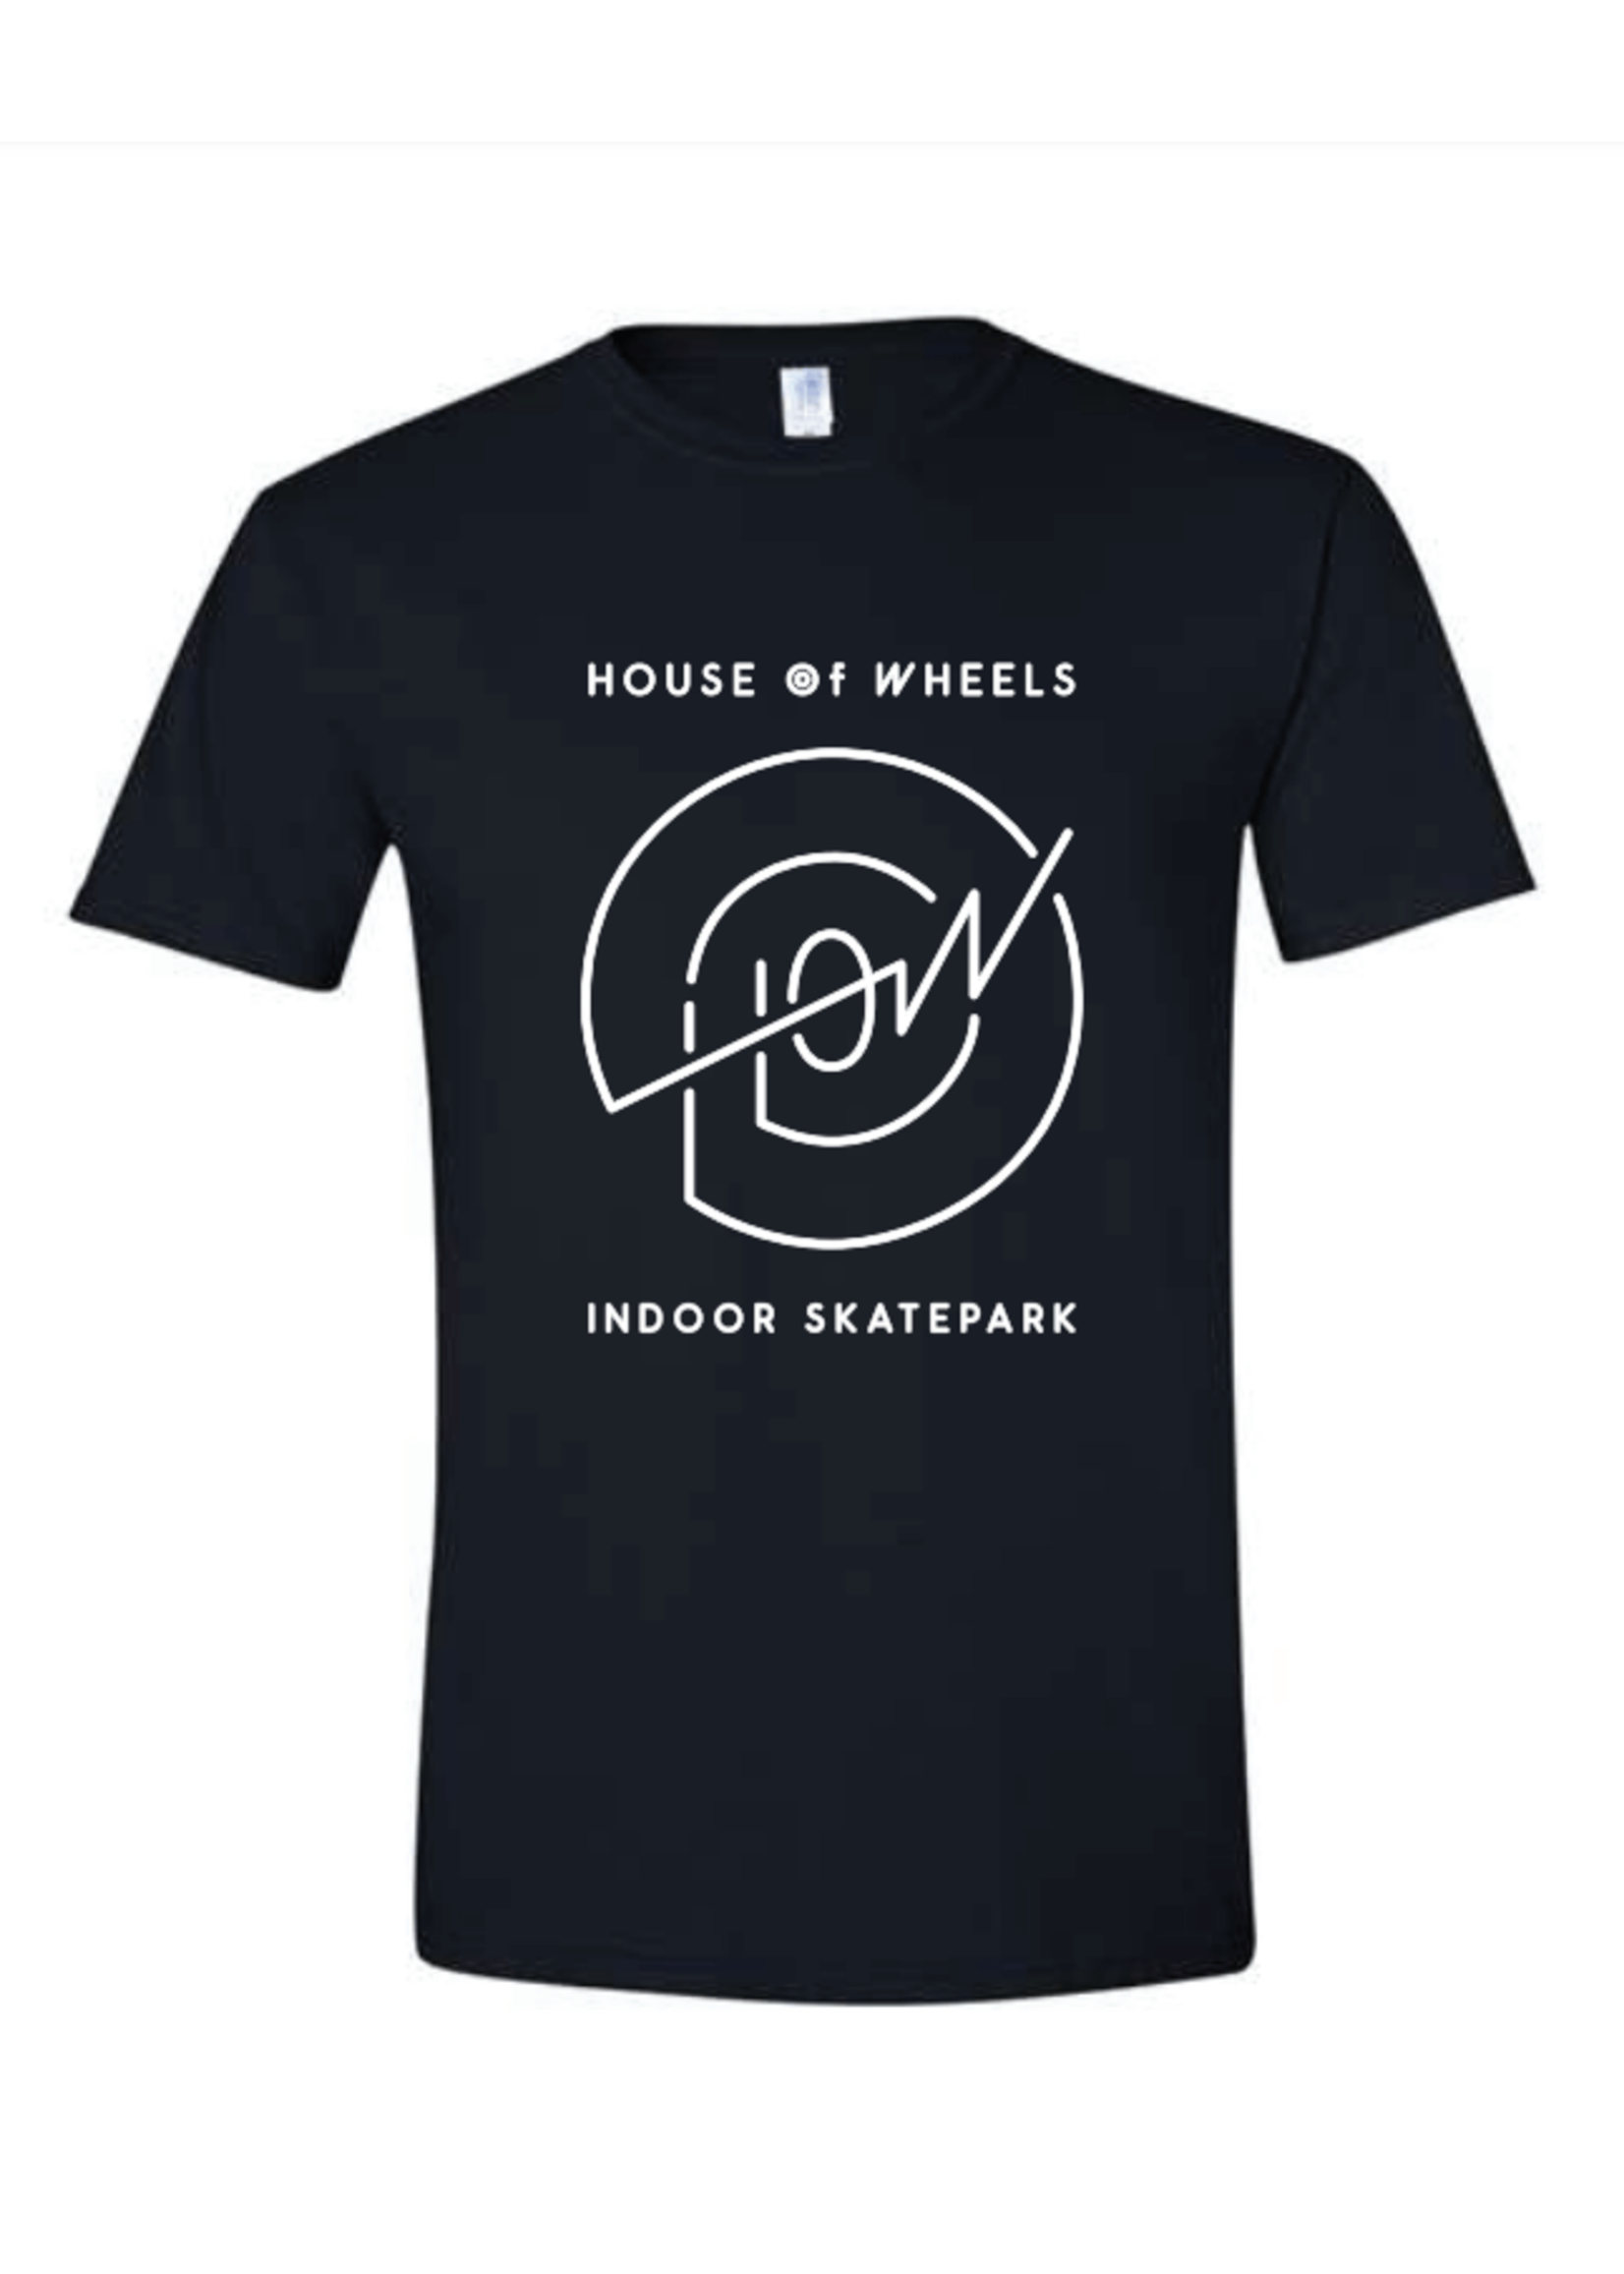 House of Wheels HOW - T-shirt Indoor skatepark (Adult) - PRE ORDER